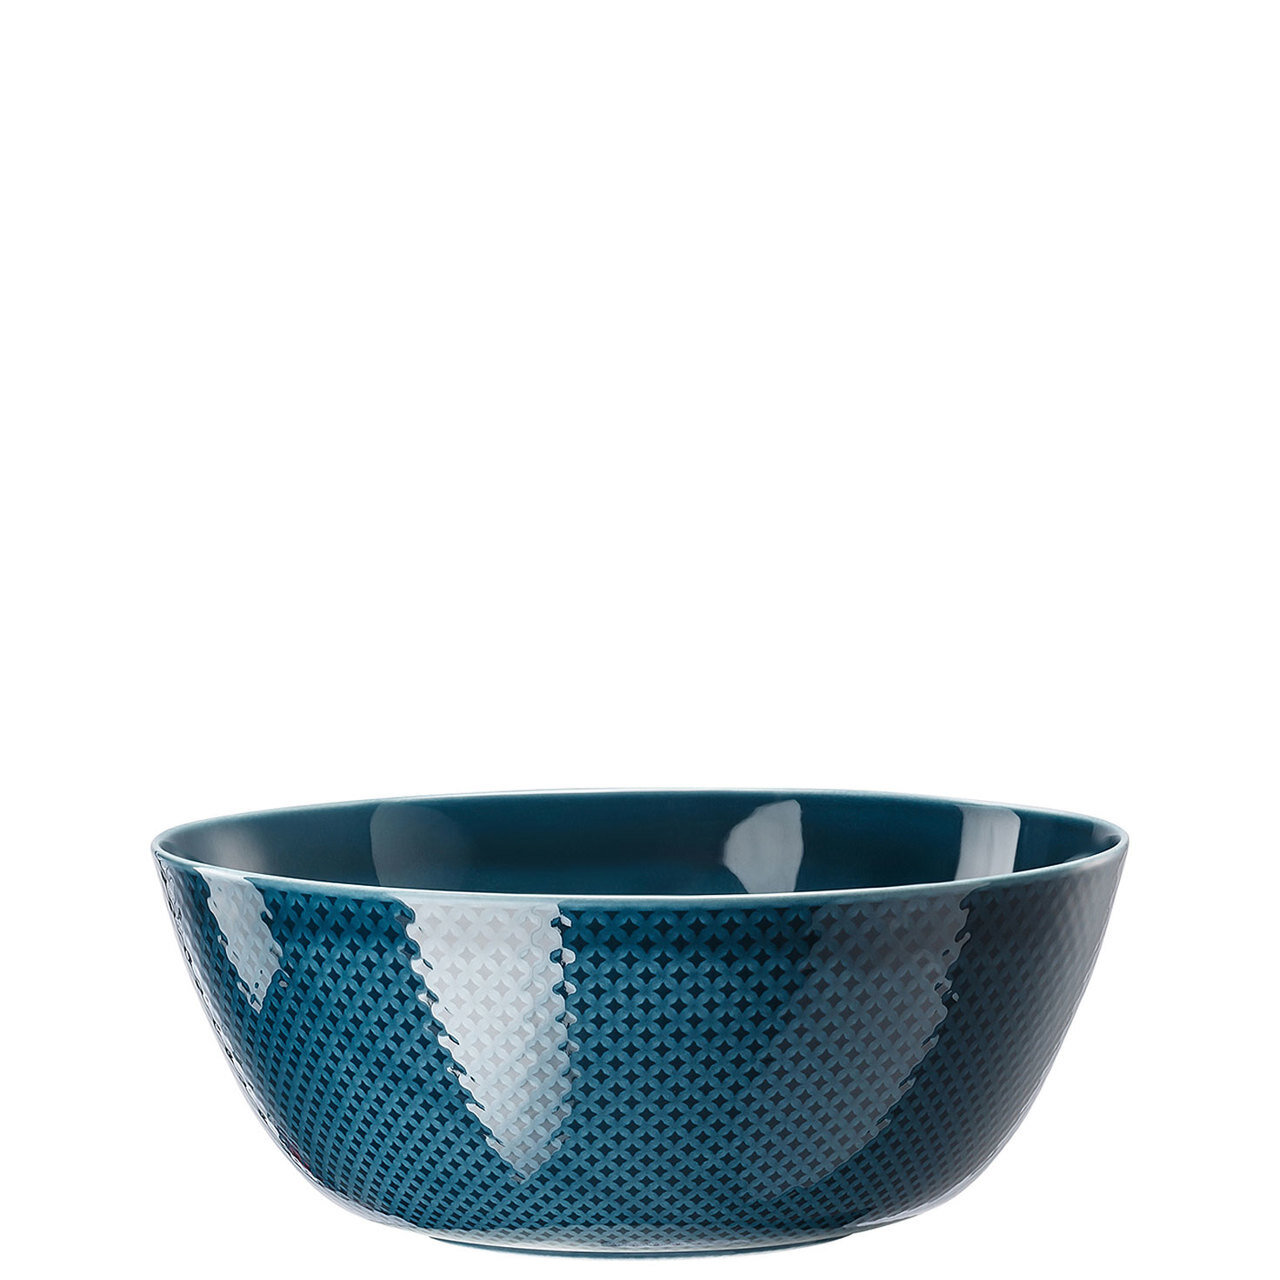 Rosenthal Junto Ocean Blue Bowl 10 1/4 Inch 112 oz